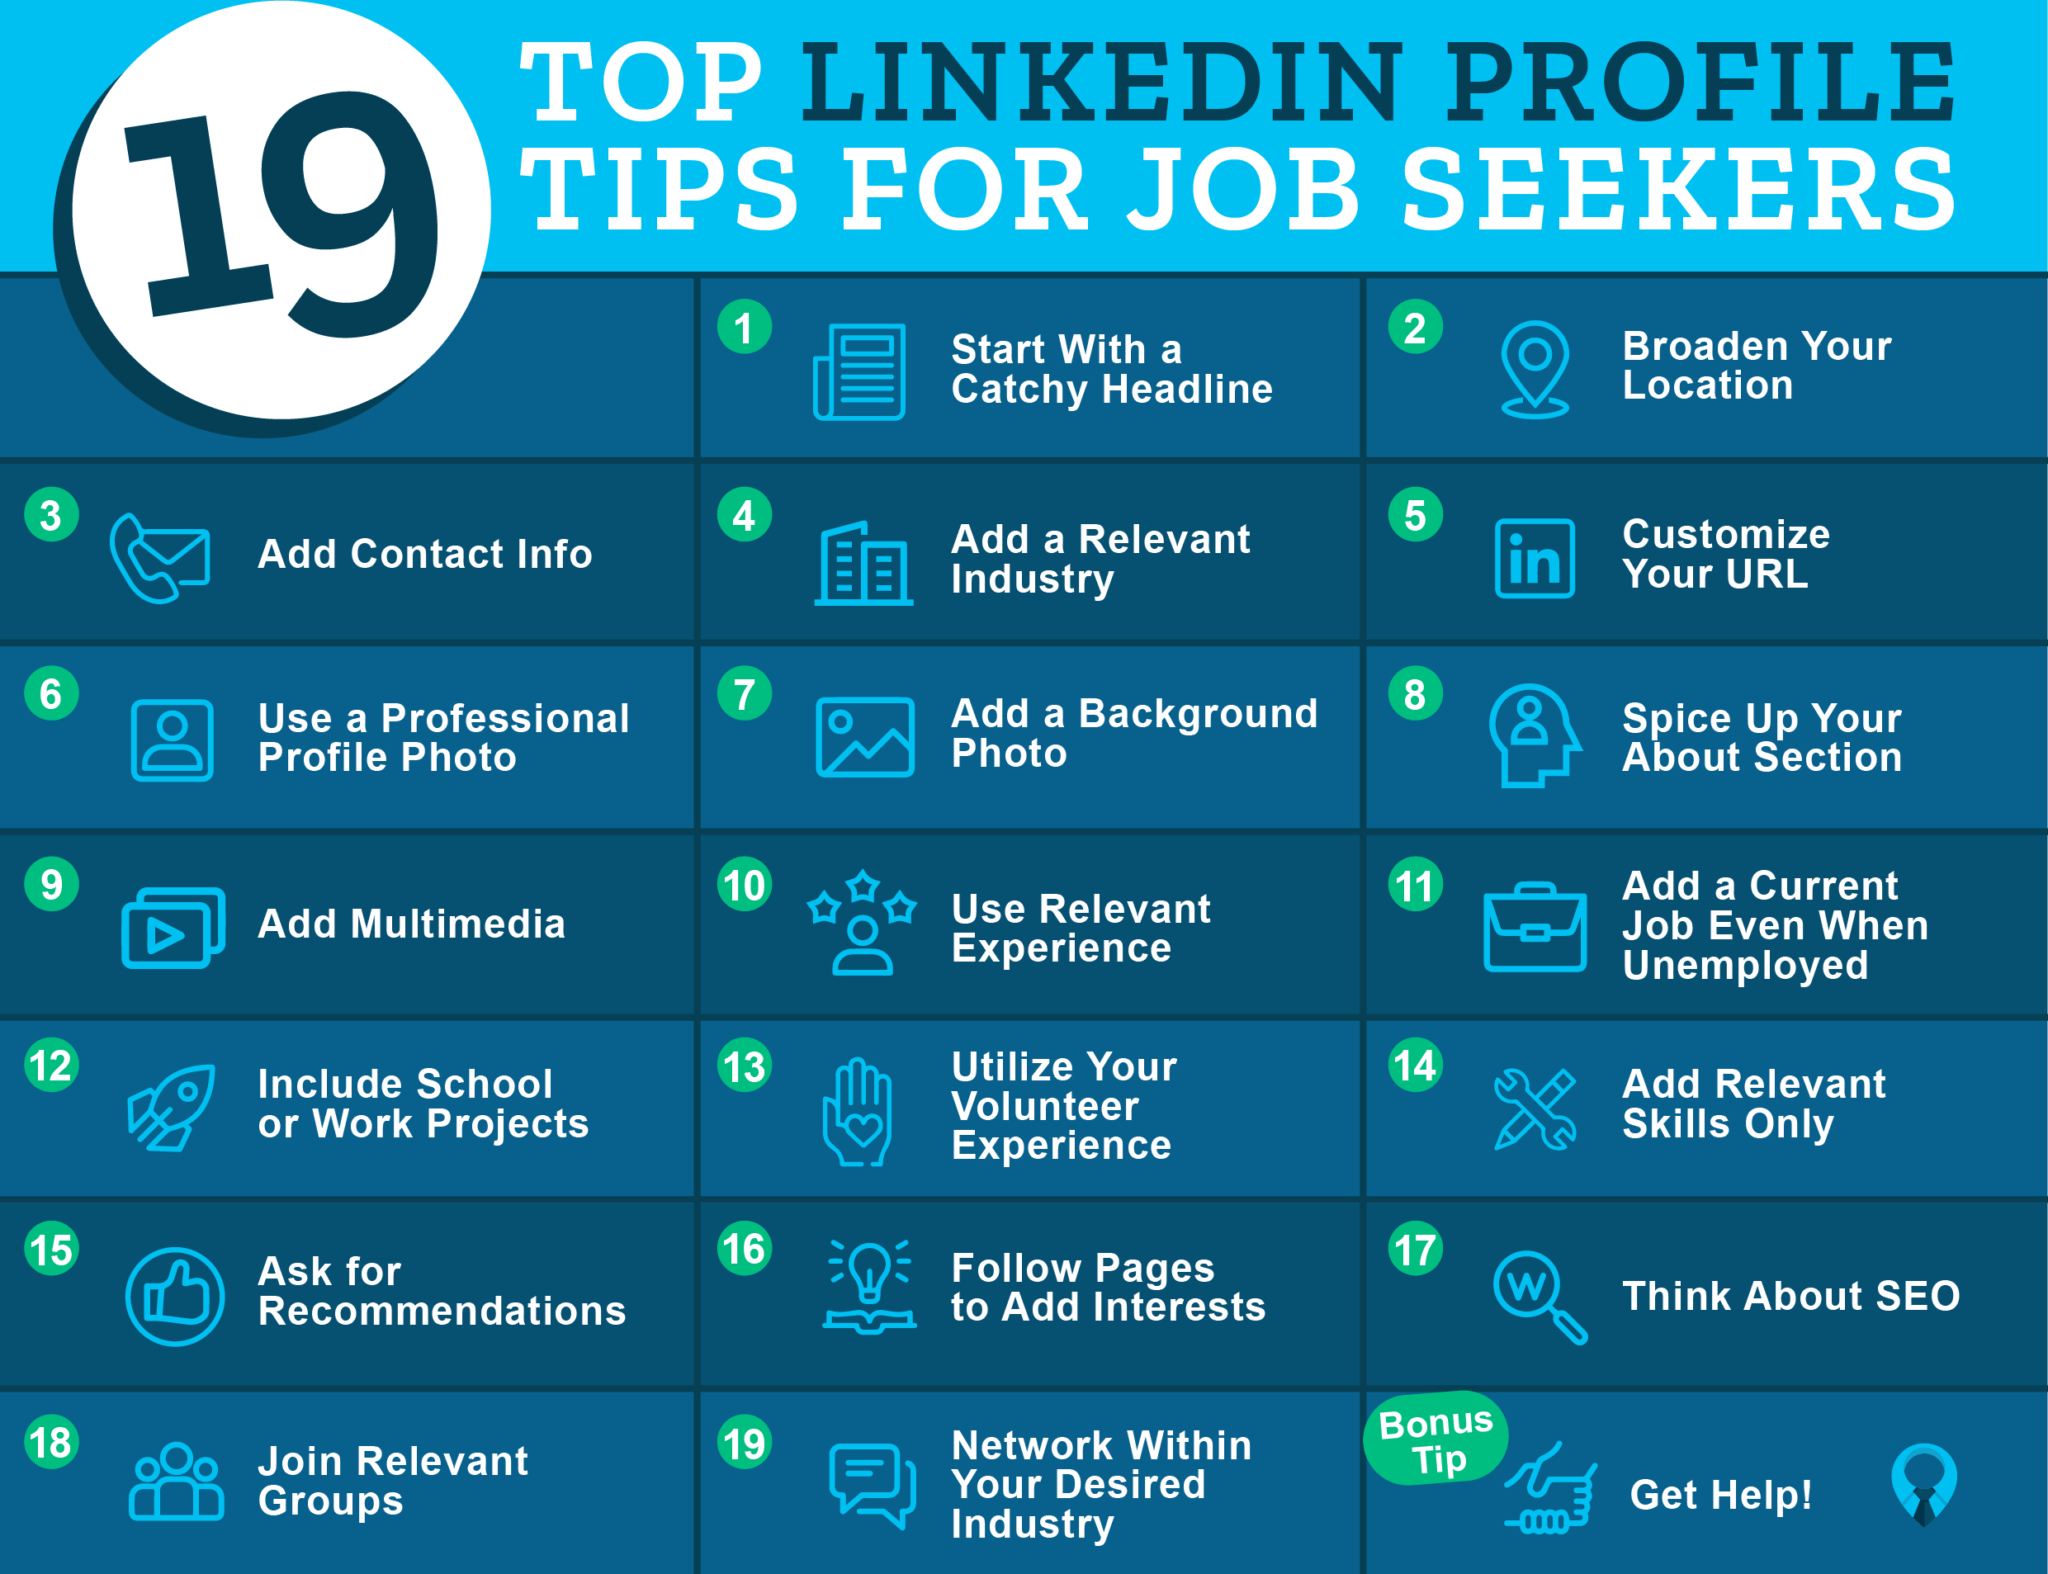 19 LinkedIn Profile Tips for Job Seekers